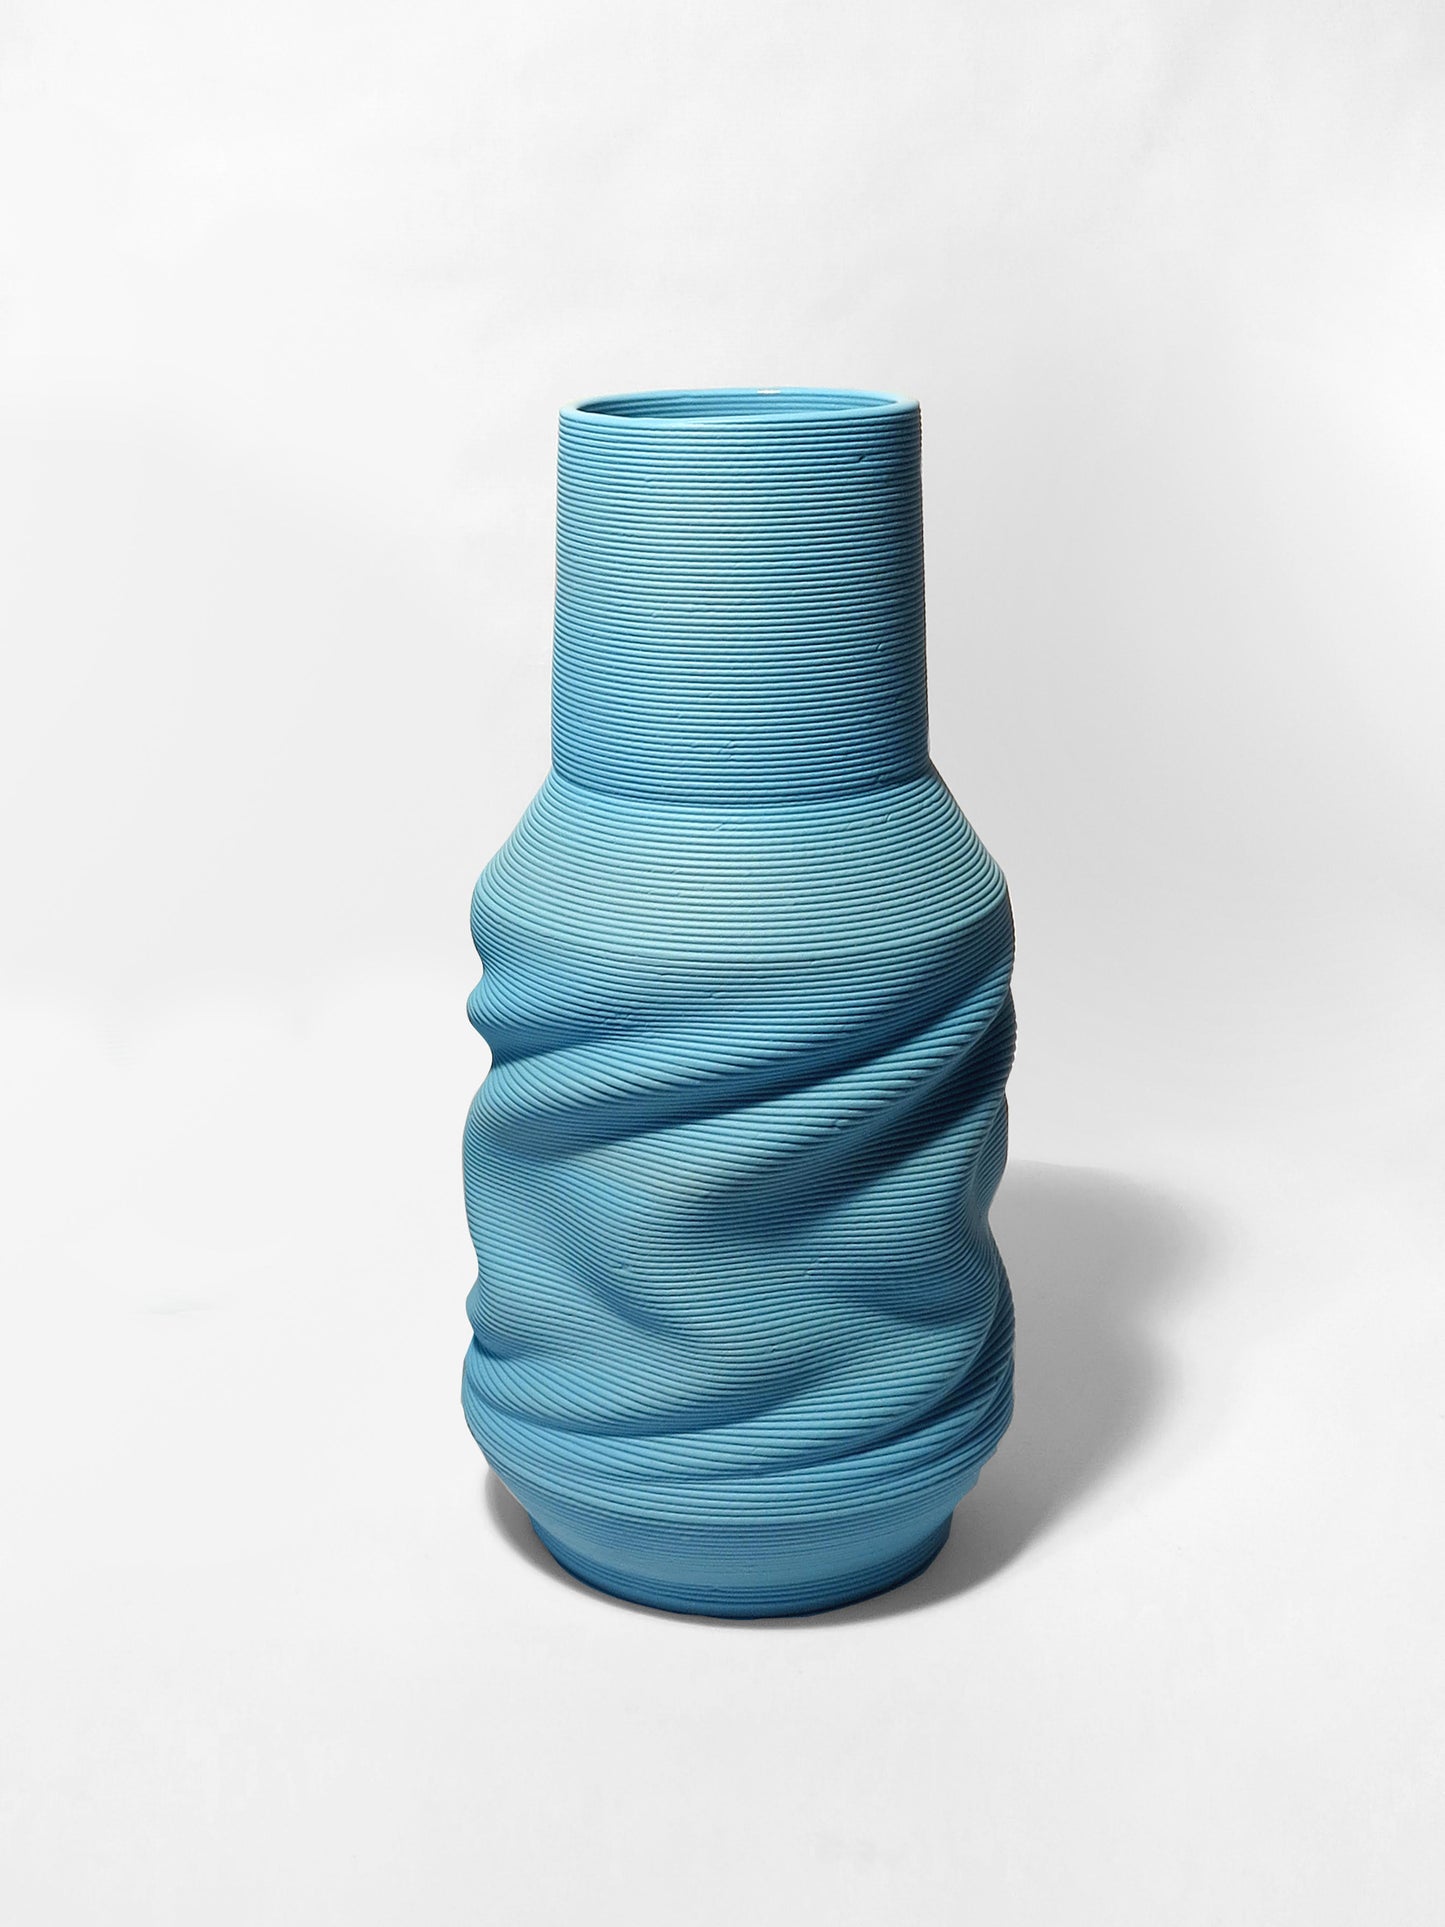 Supersonic X, Vase No. 4 by Babette Wiezorek